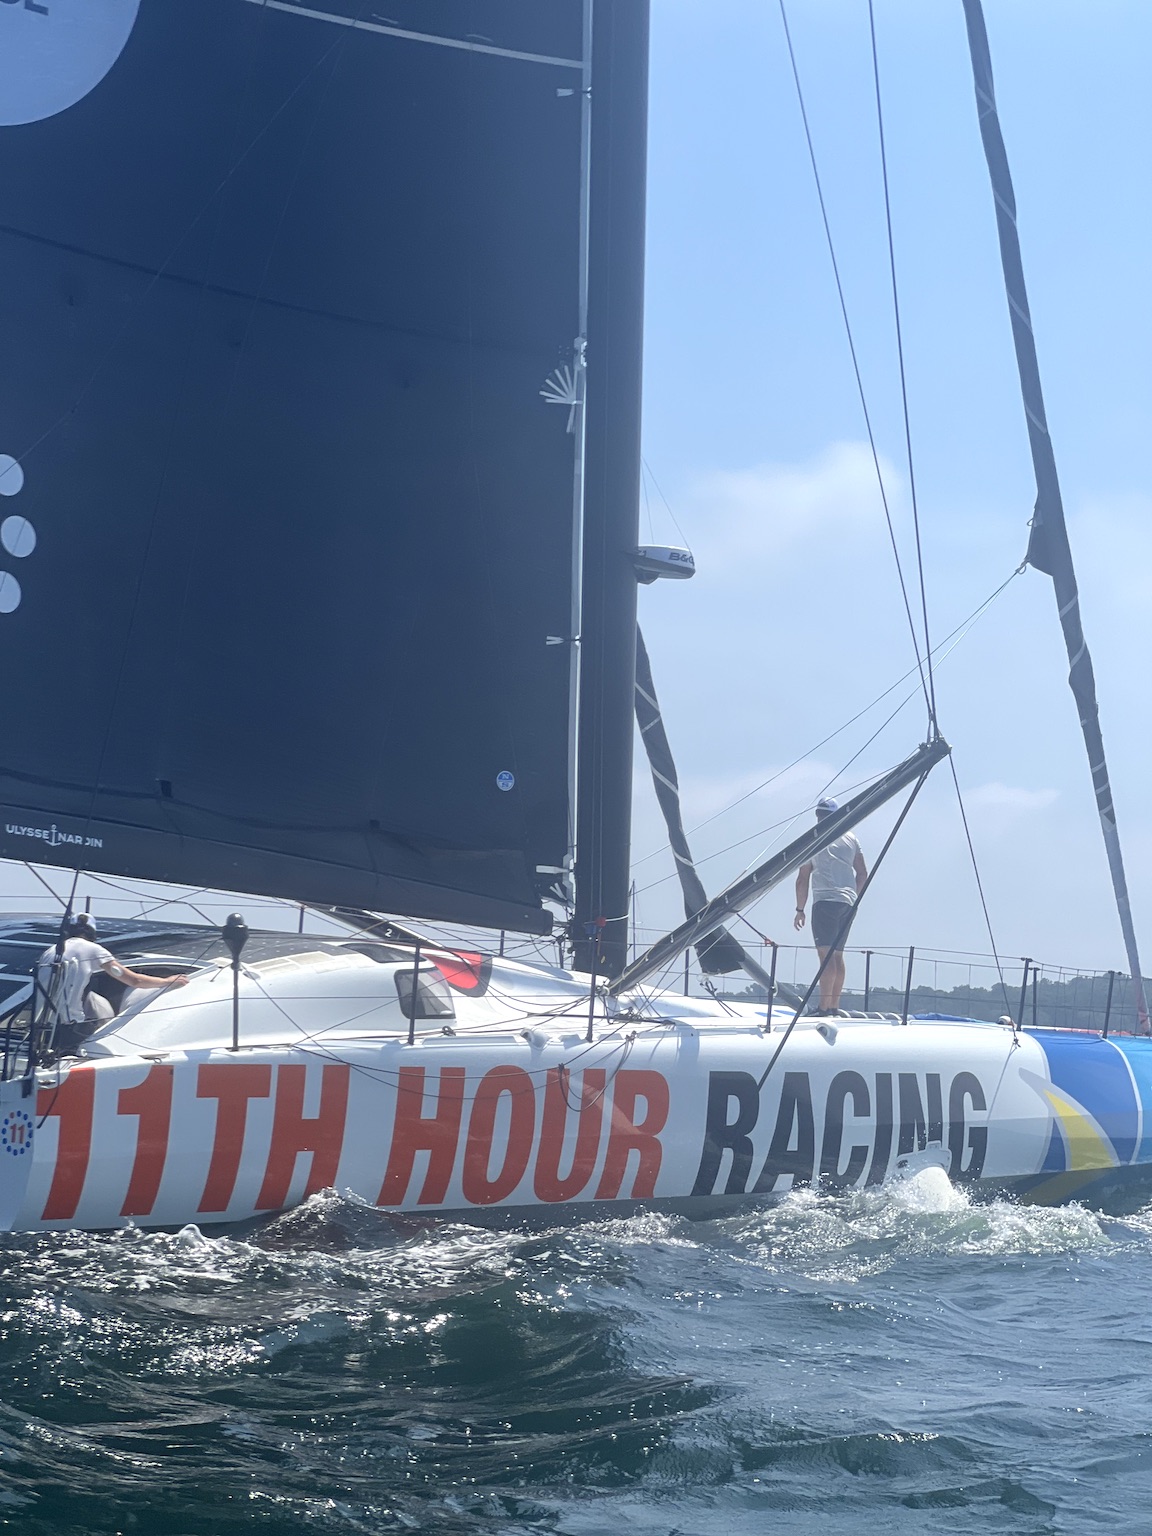 Ulysse Nardin partners as Official Timekeeper of 11th Hour Racing Team as it readies for The Ocean Race.